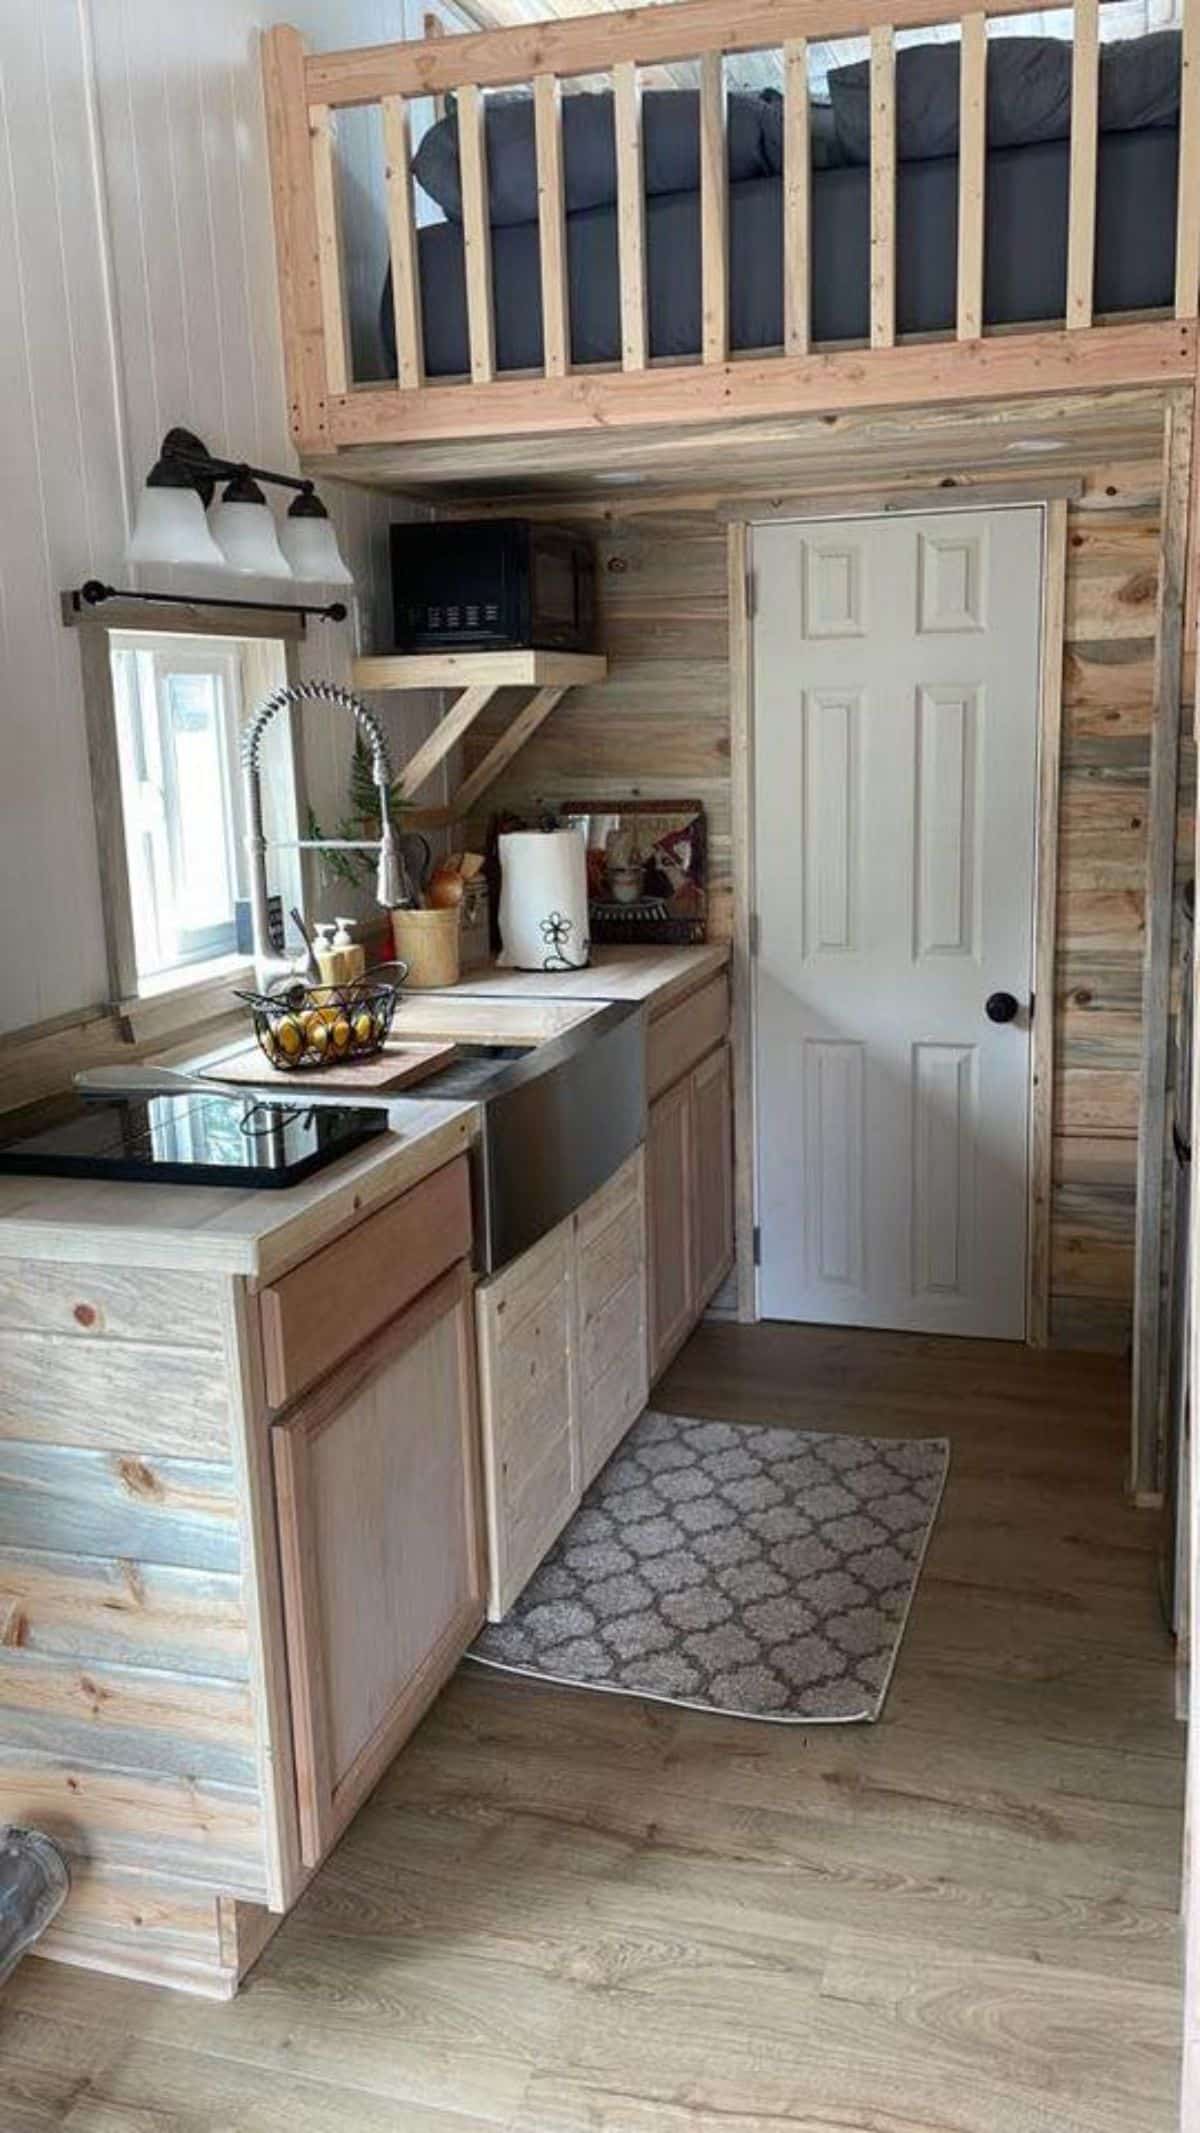 Kitchen area of 20’ Tiny House